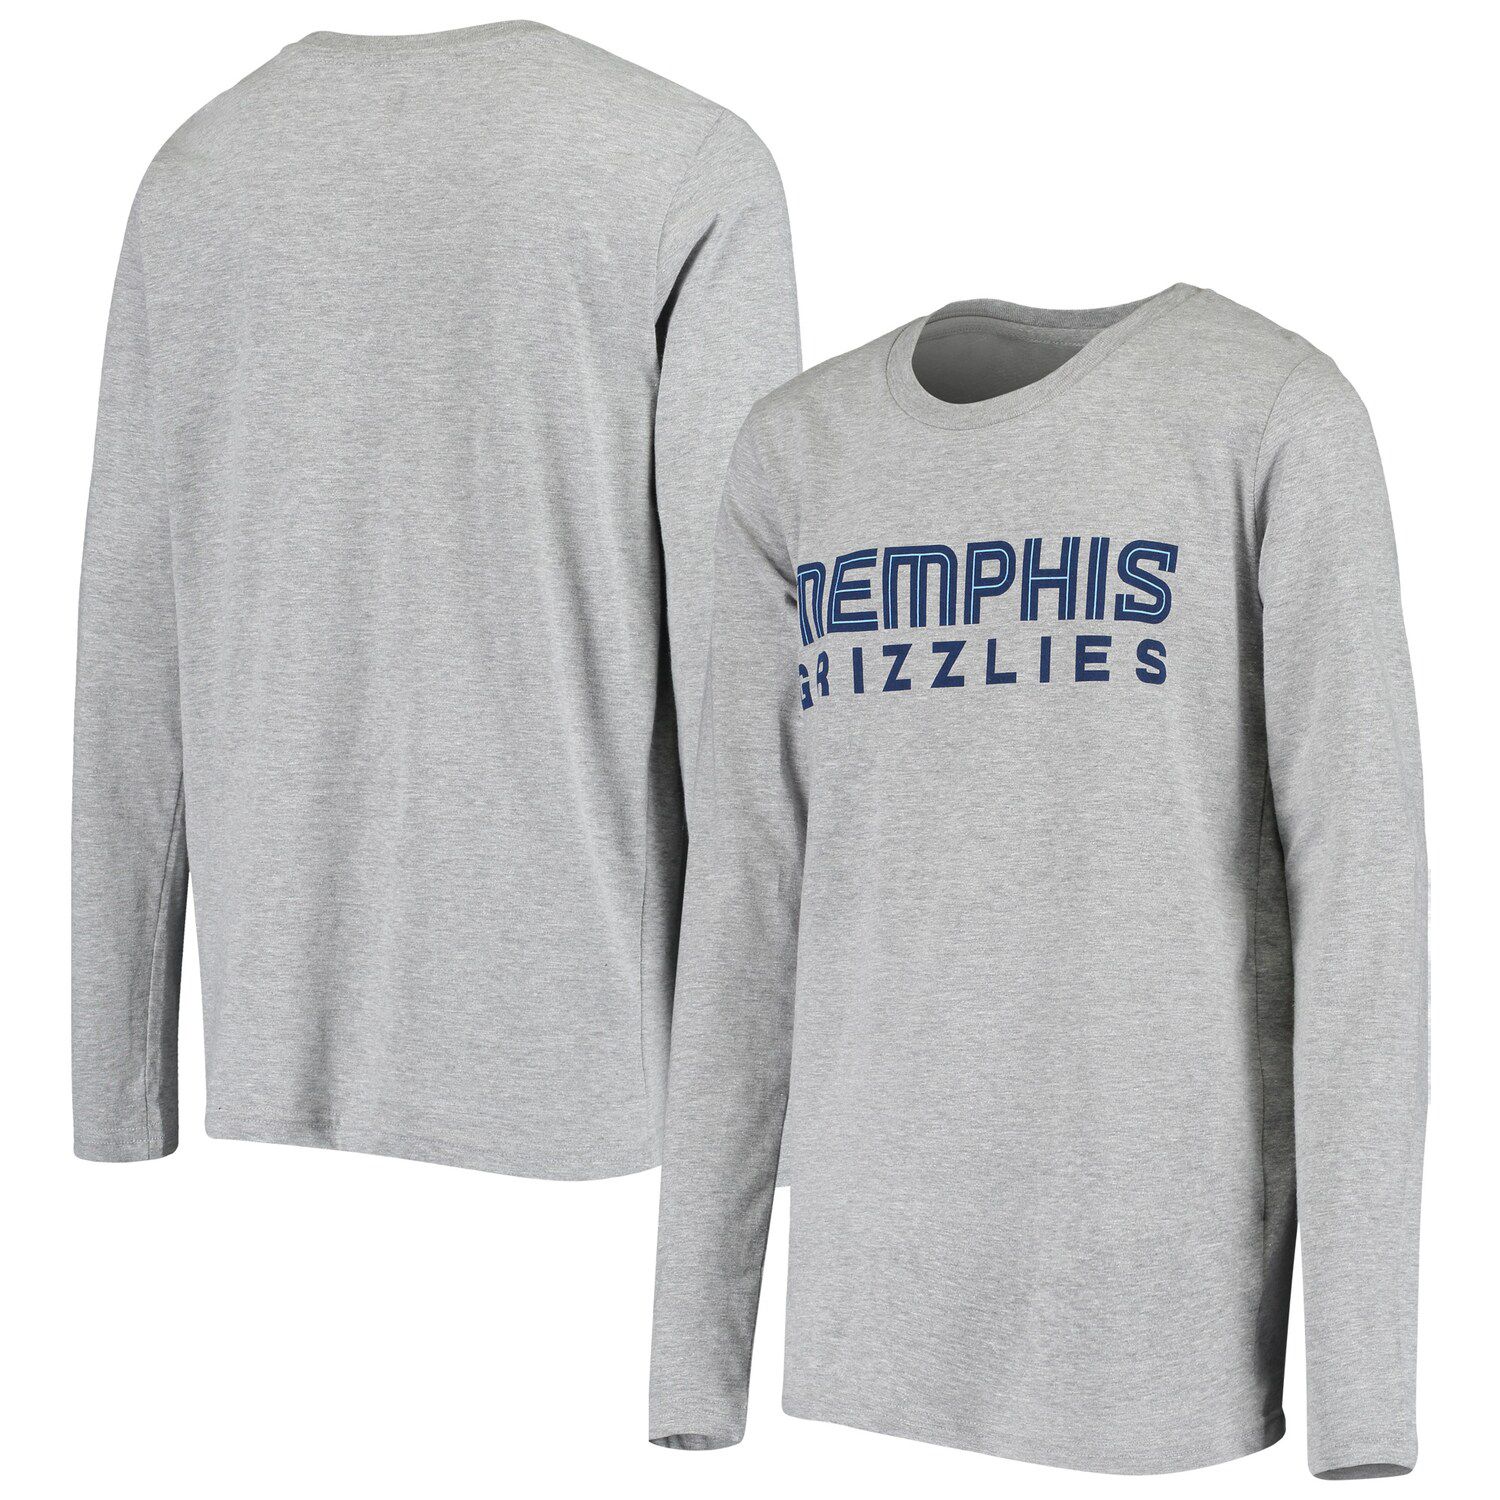 memphis grizzlies tee shirts